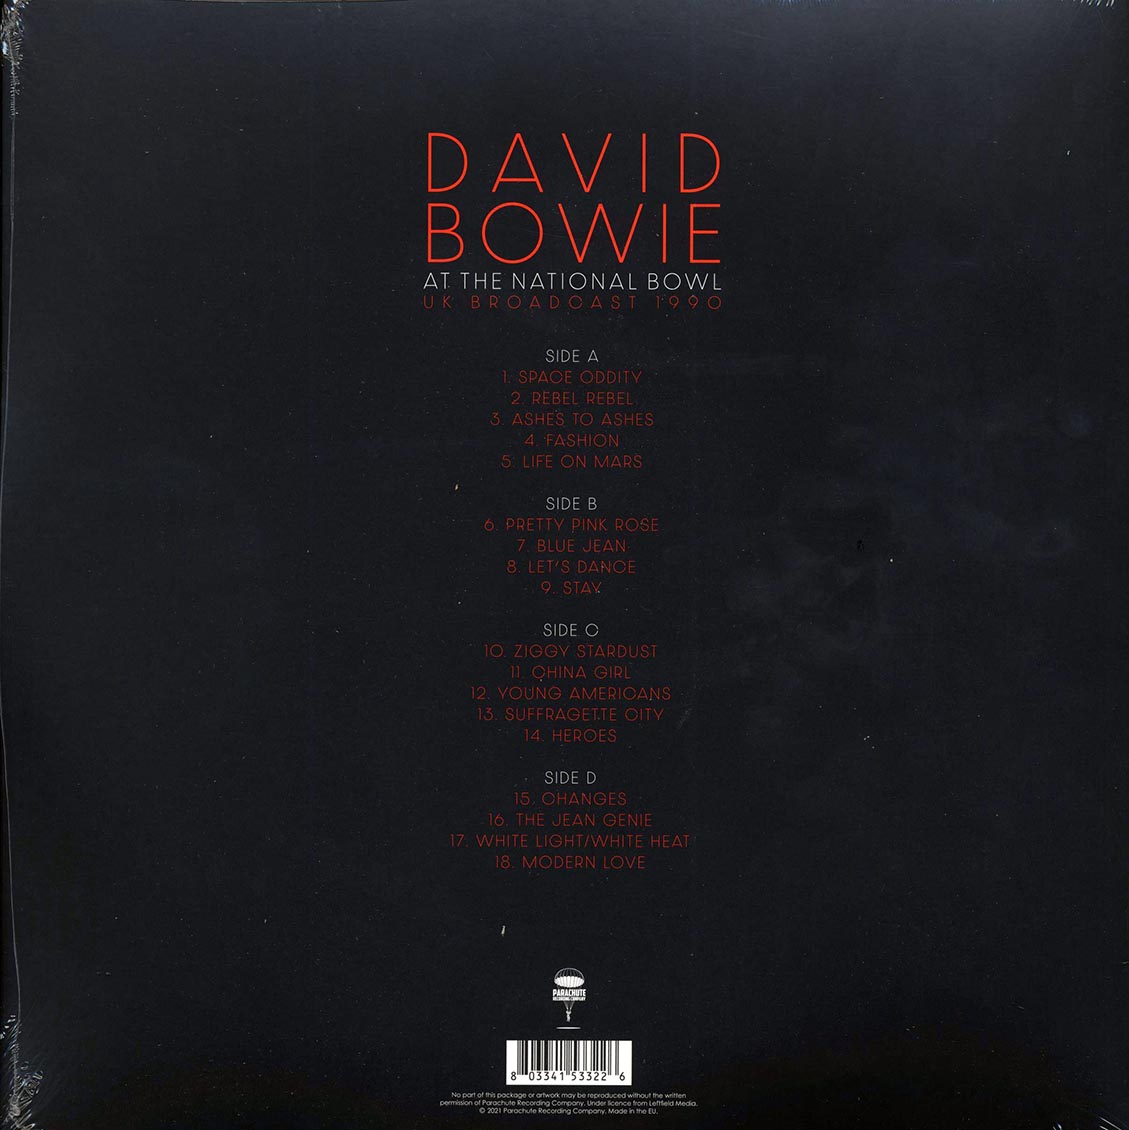 David Bowie - At The National Bowl UK Broadcast 1990: Milton Keynes, England, August 5th 1990 (2xLP) - Vinyl LP, LP